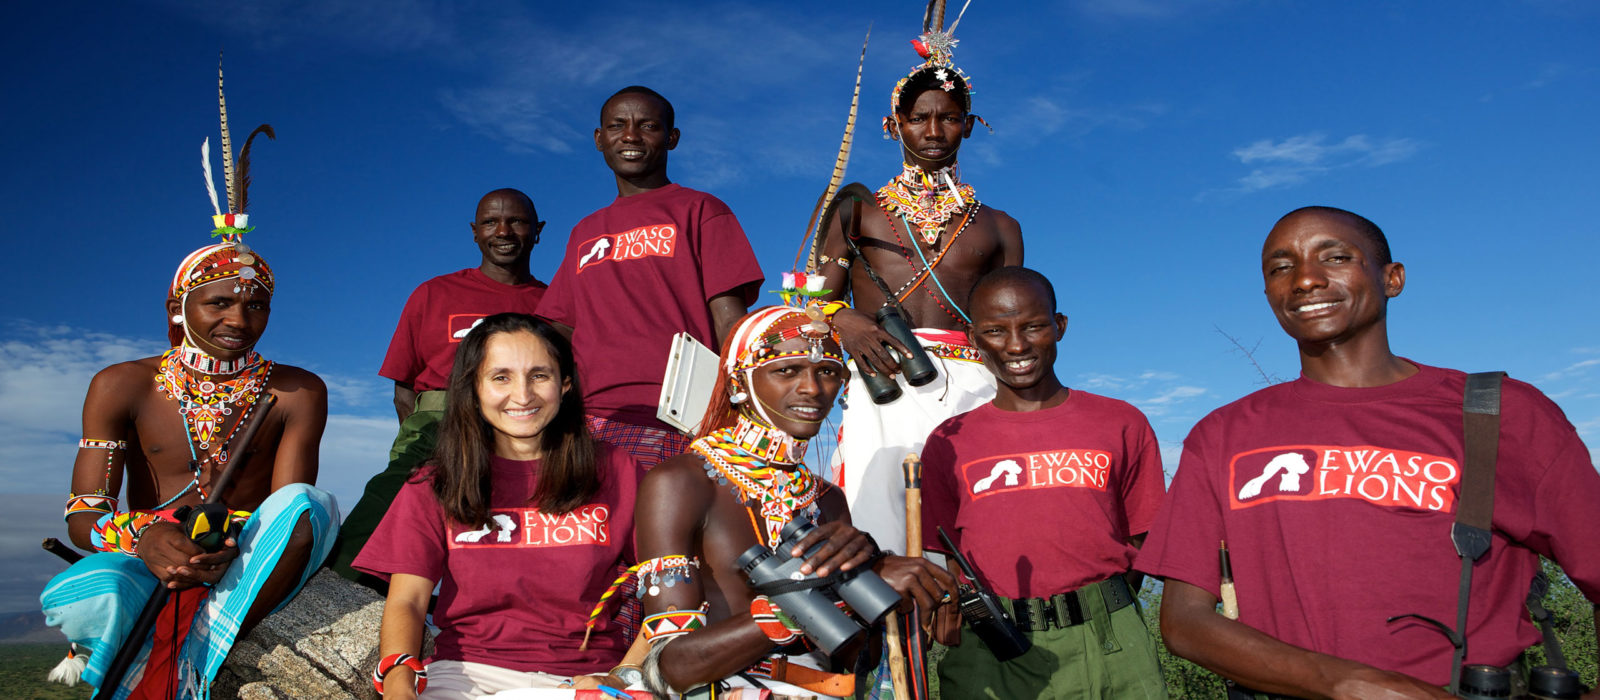 Shivani and team Ewaso Lions Kenya